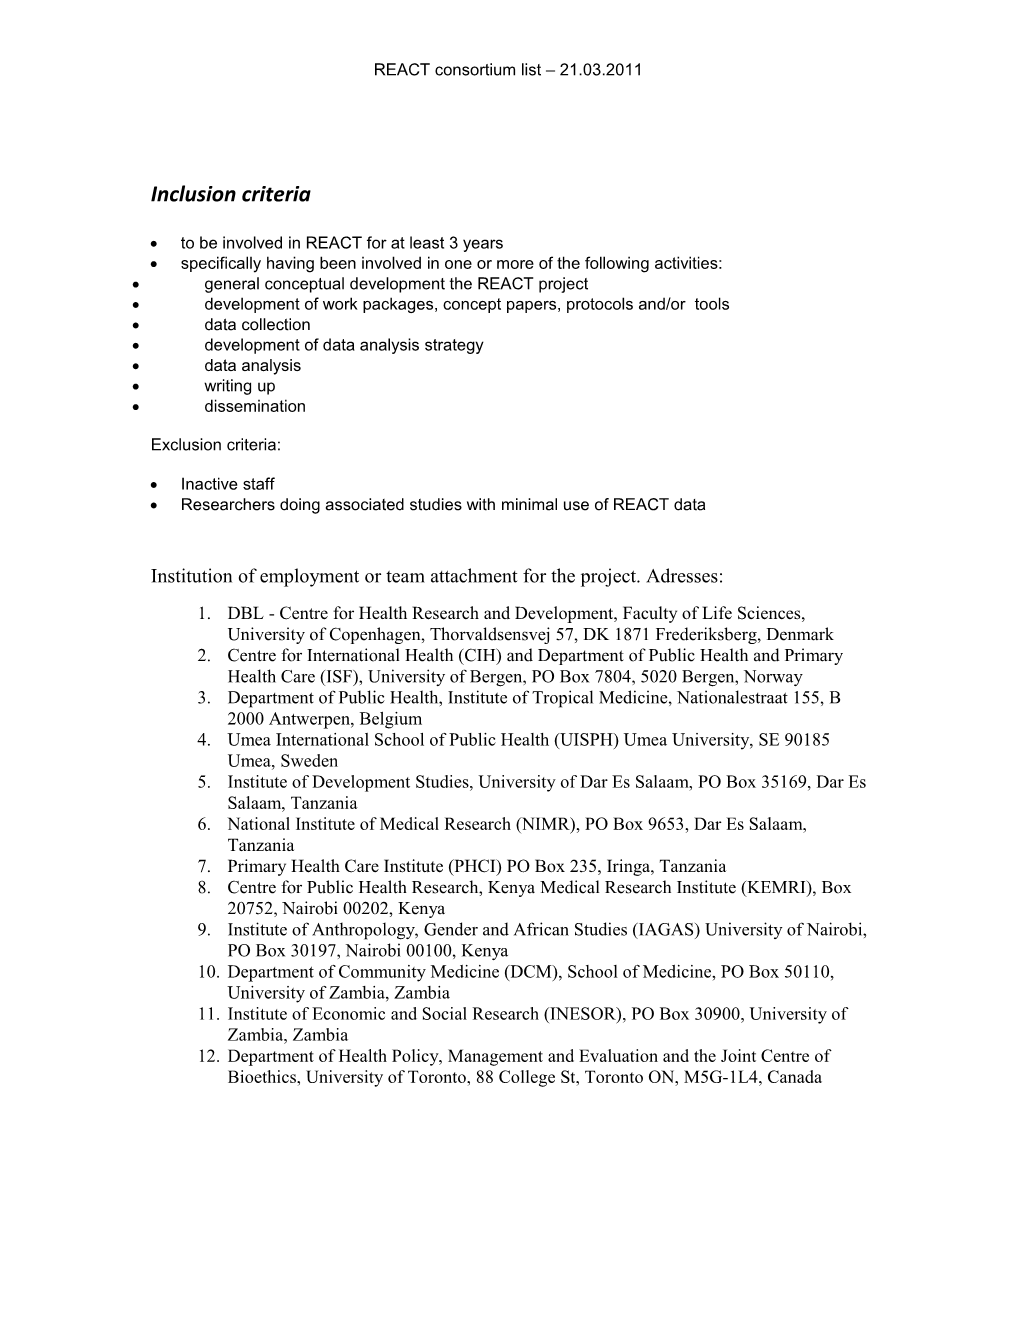 REACT Consortium List 21.03.2011